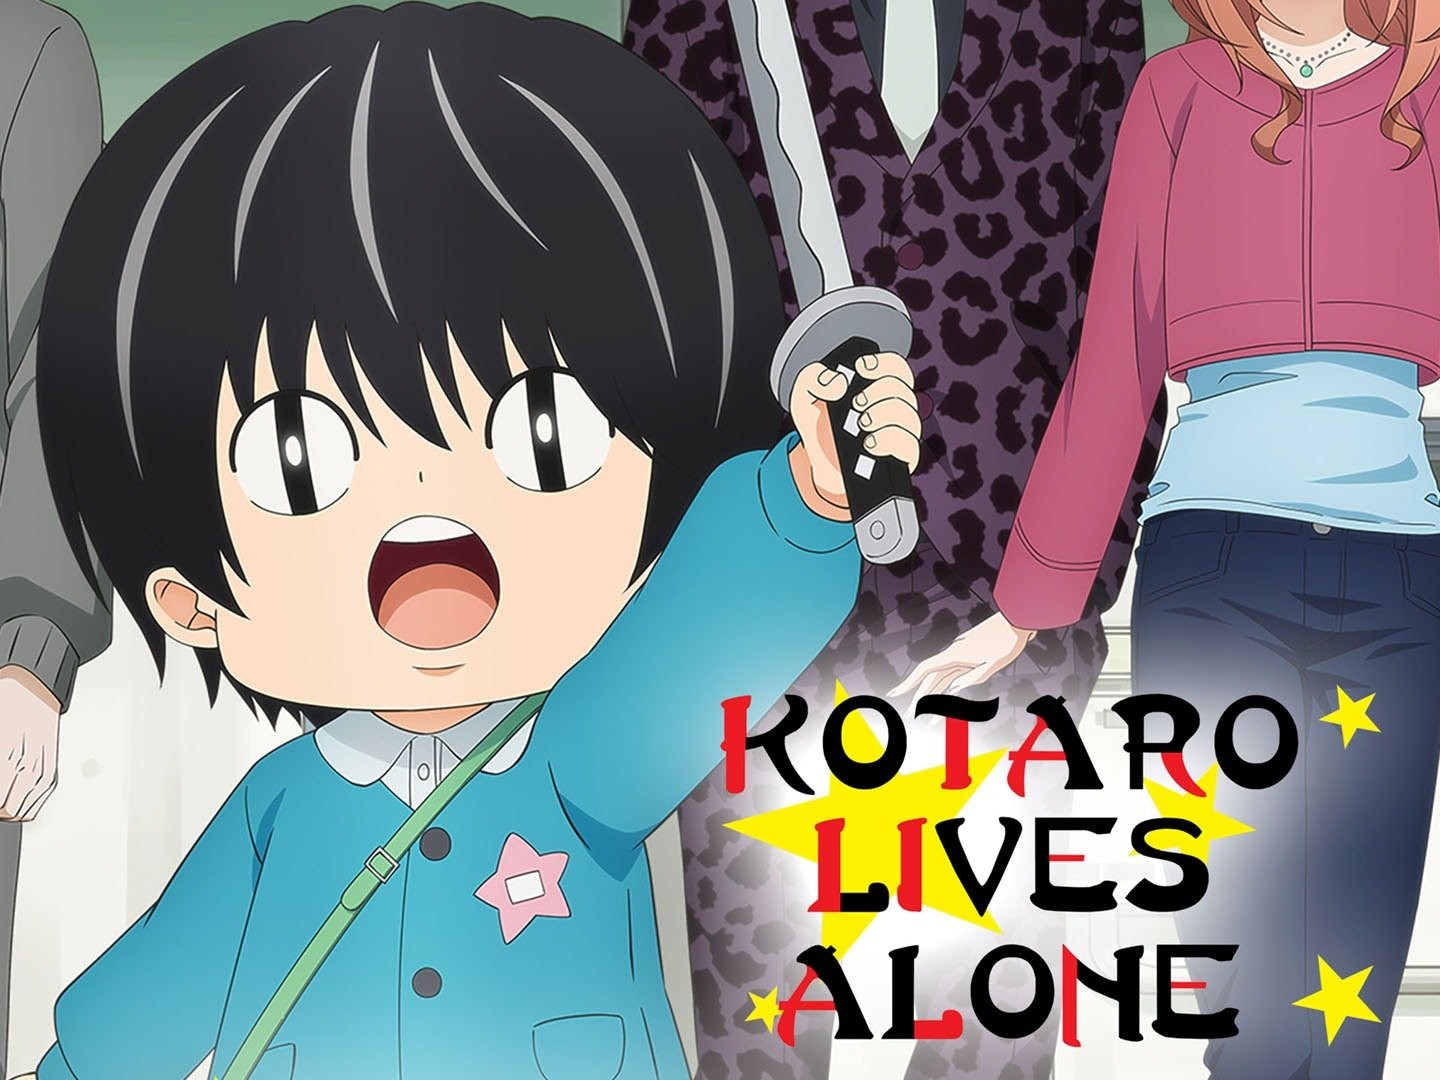 Kotaro Lives Alone: The Psychology Behind Childhood Trauma